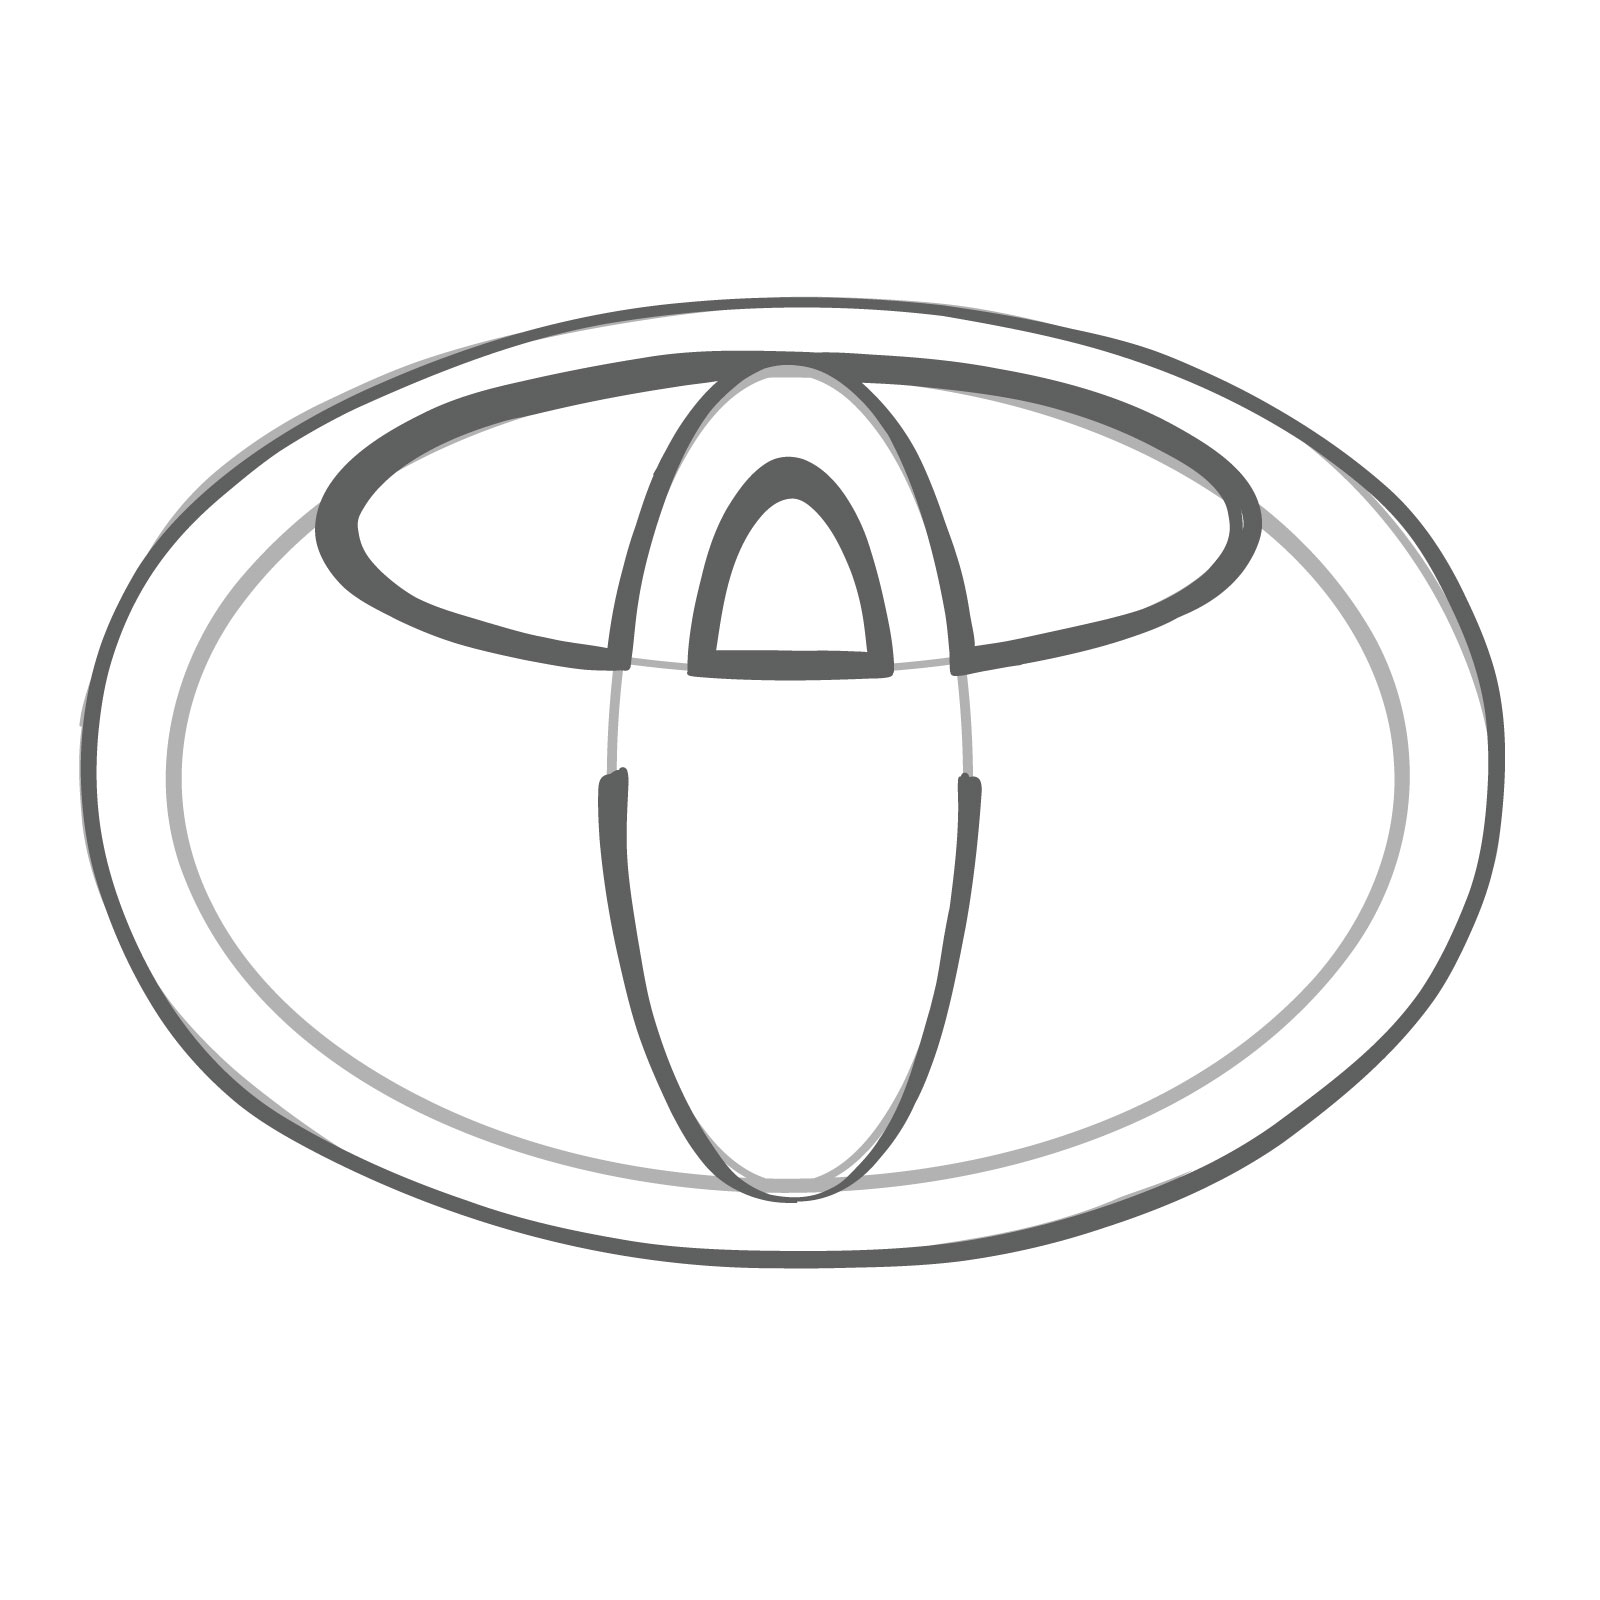 How to draw a Toyota logo - step 08